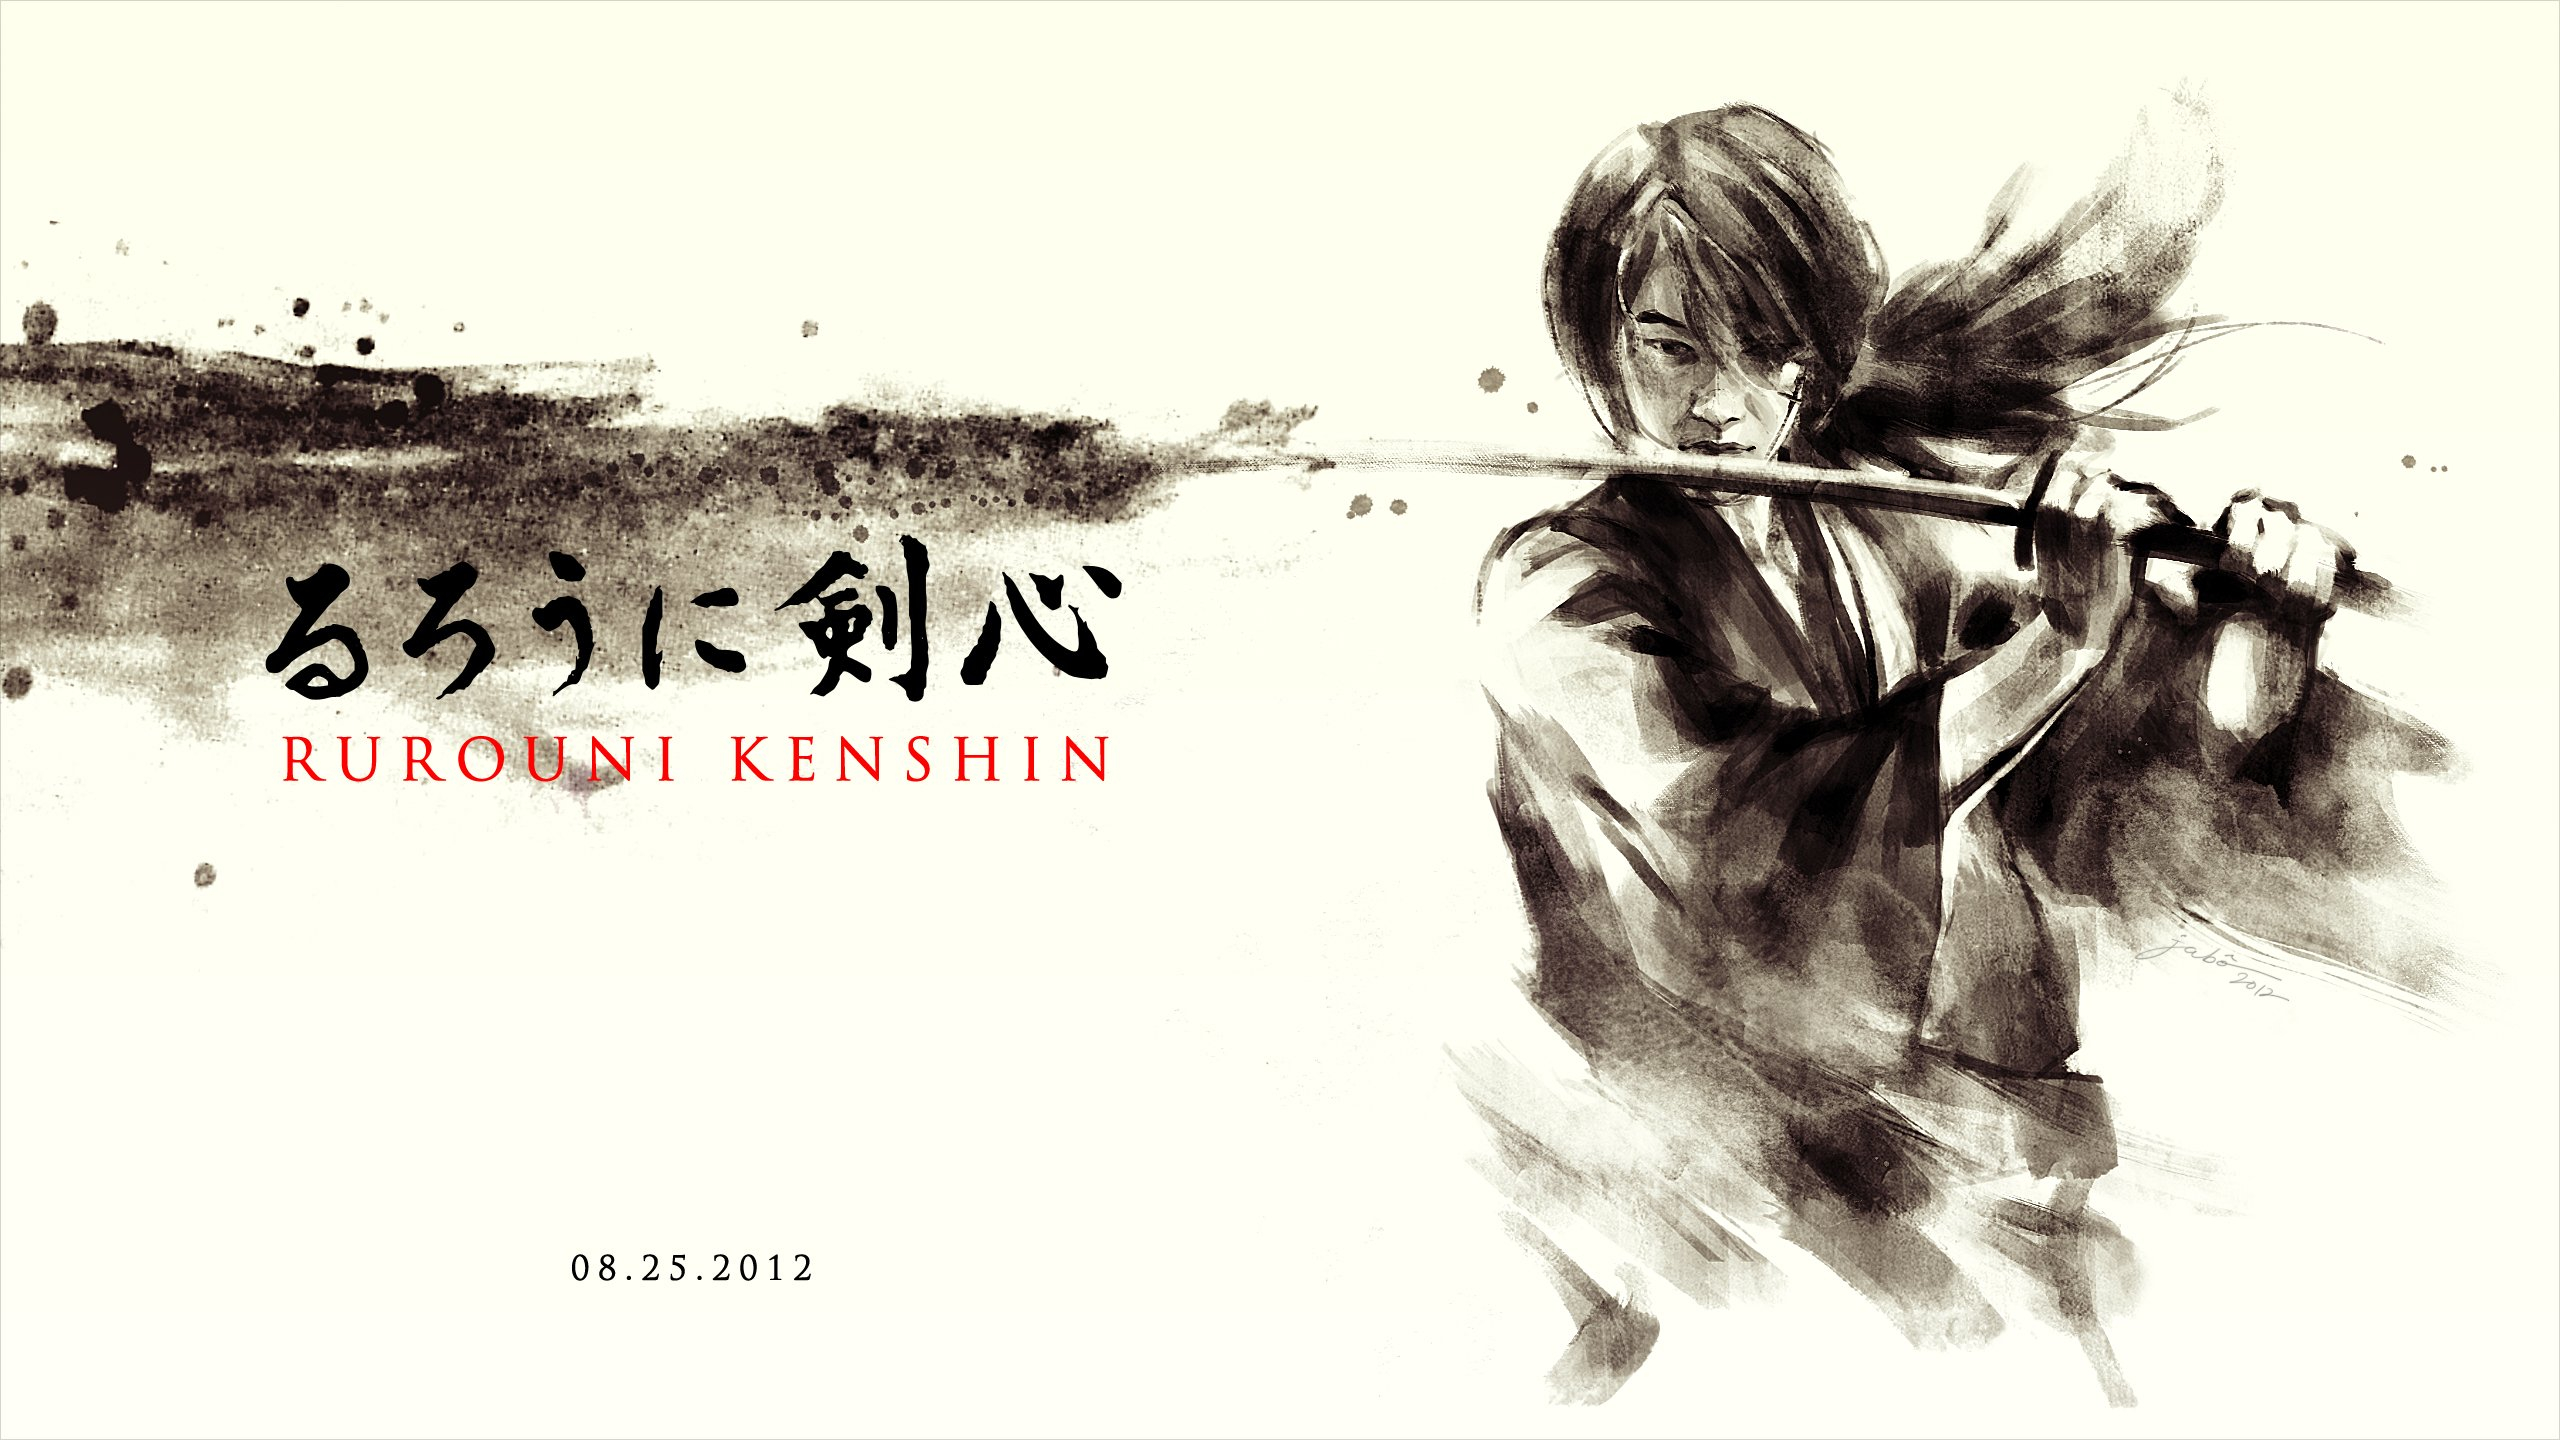 2560x1440 Rurouni Kenshin warrior fantasy anime warrior japanese samurai action fighting martial wallpaper | | 604980